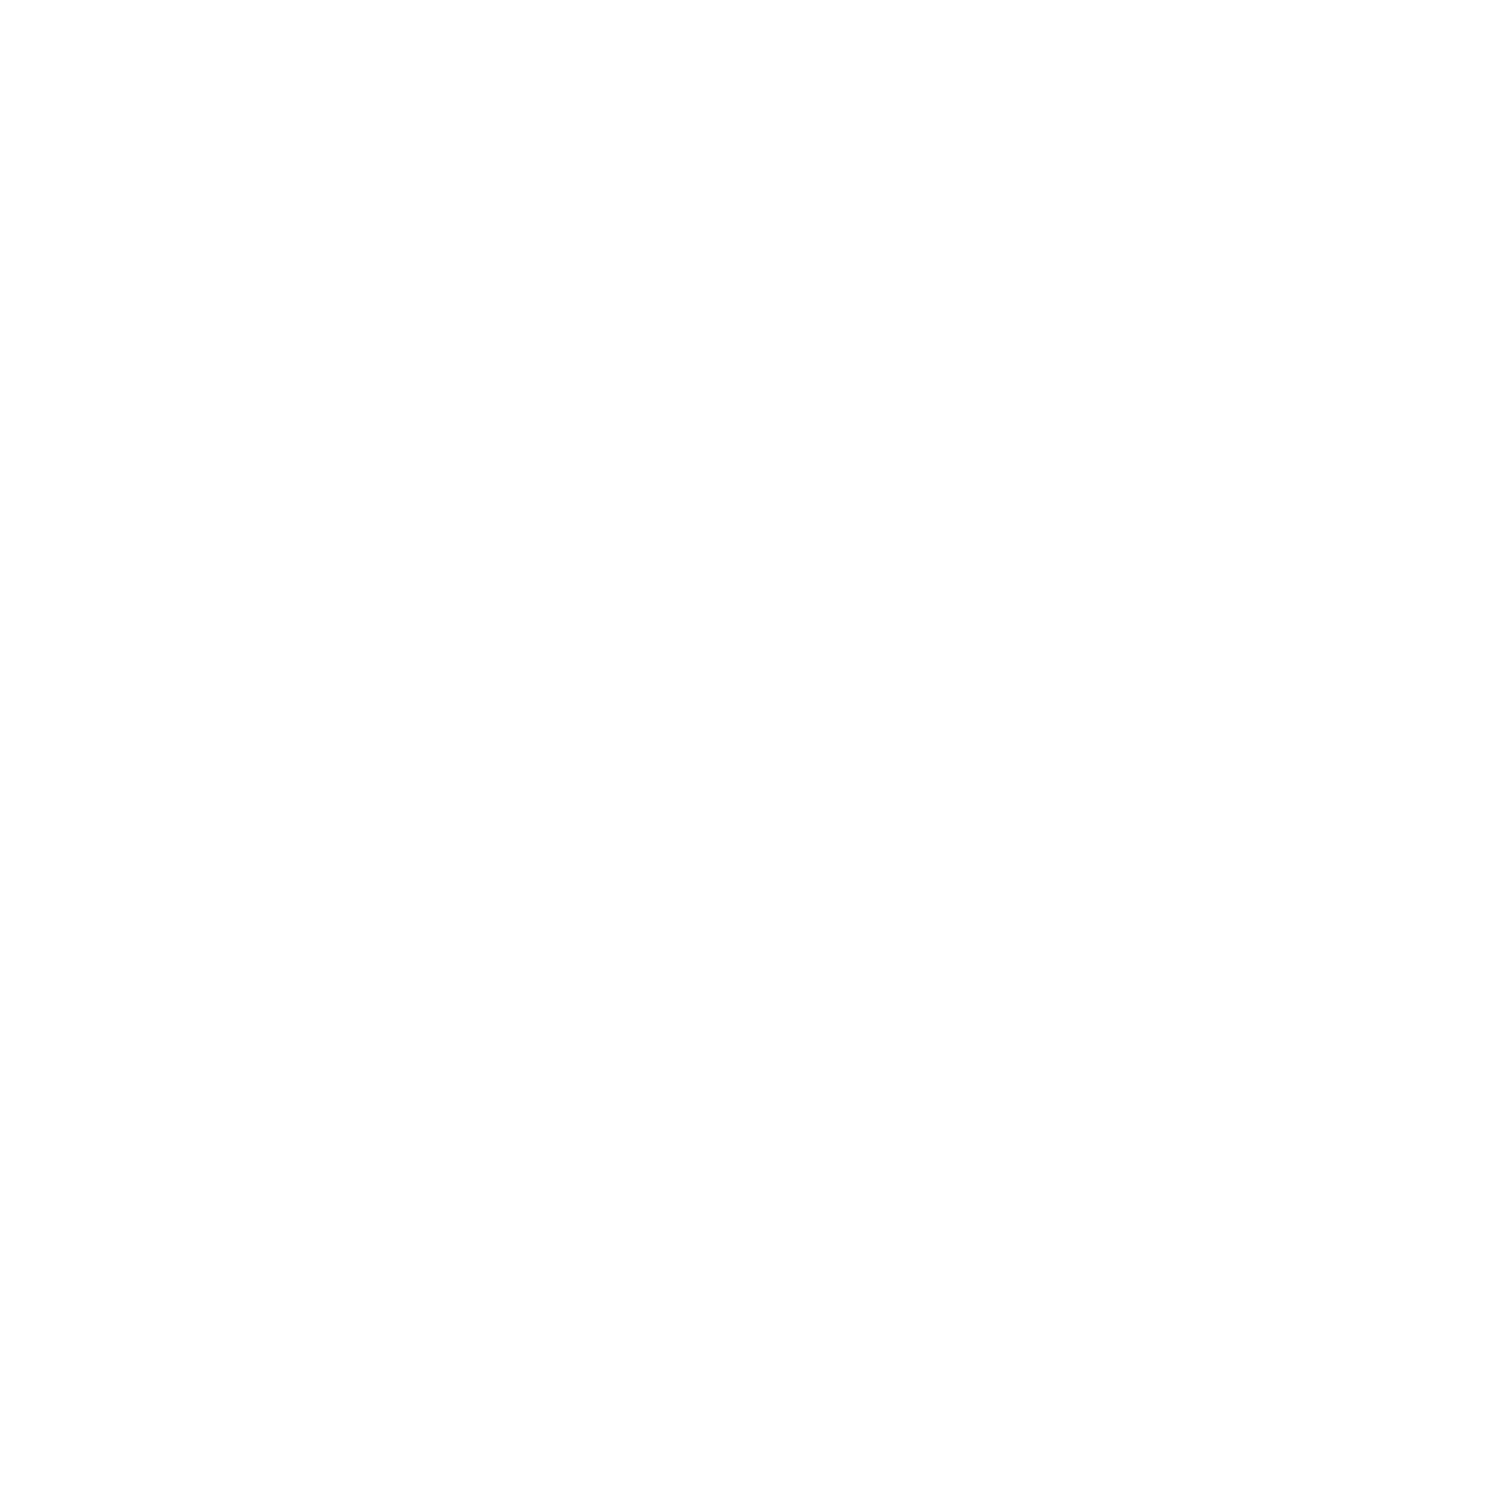 Harvest Rock Church  |  East Bay